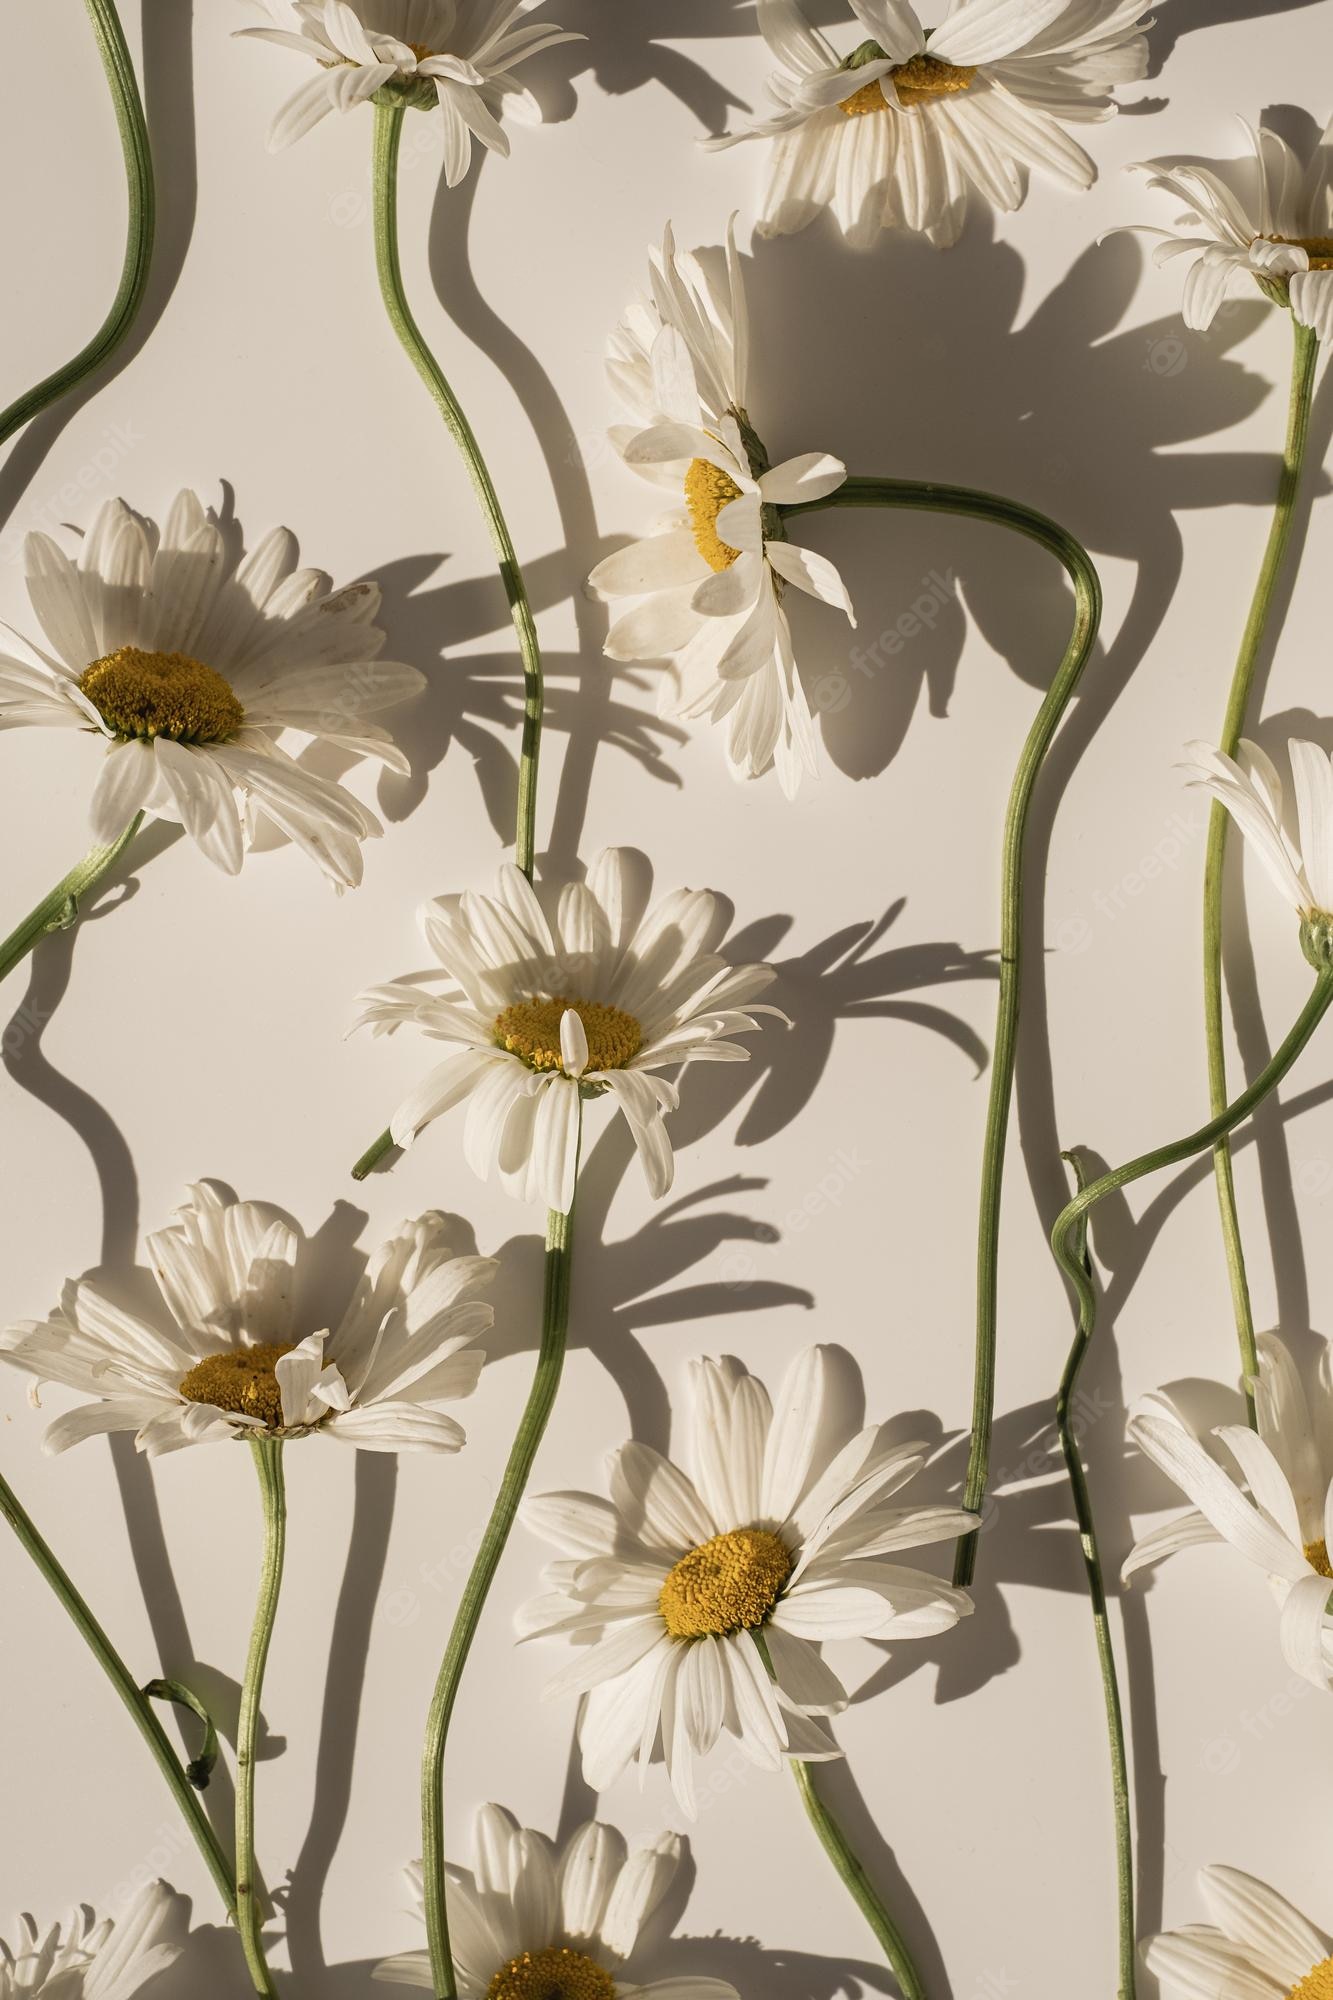 White daisies on a white background - Daisy